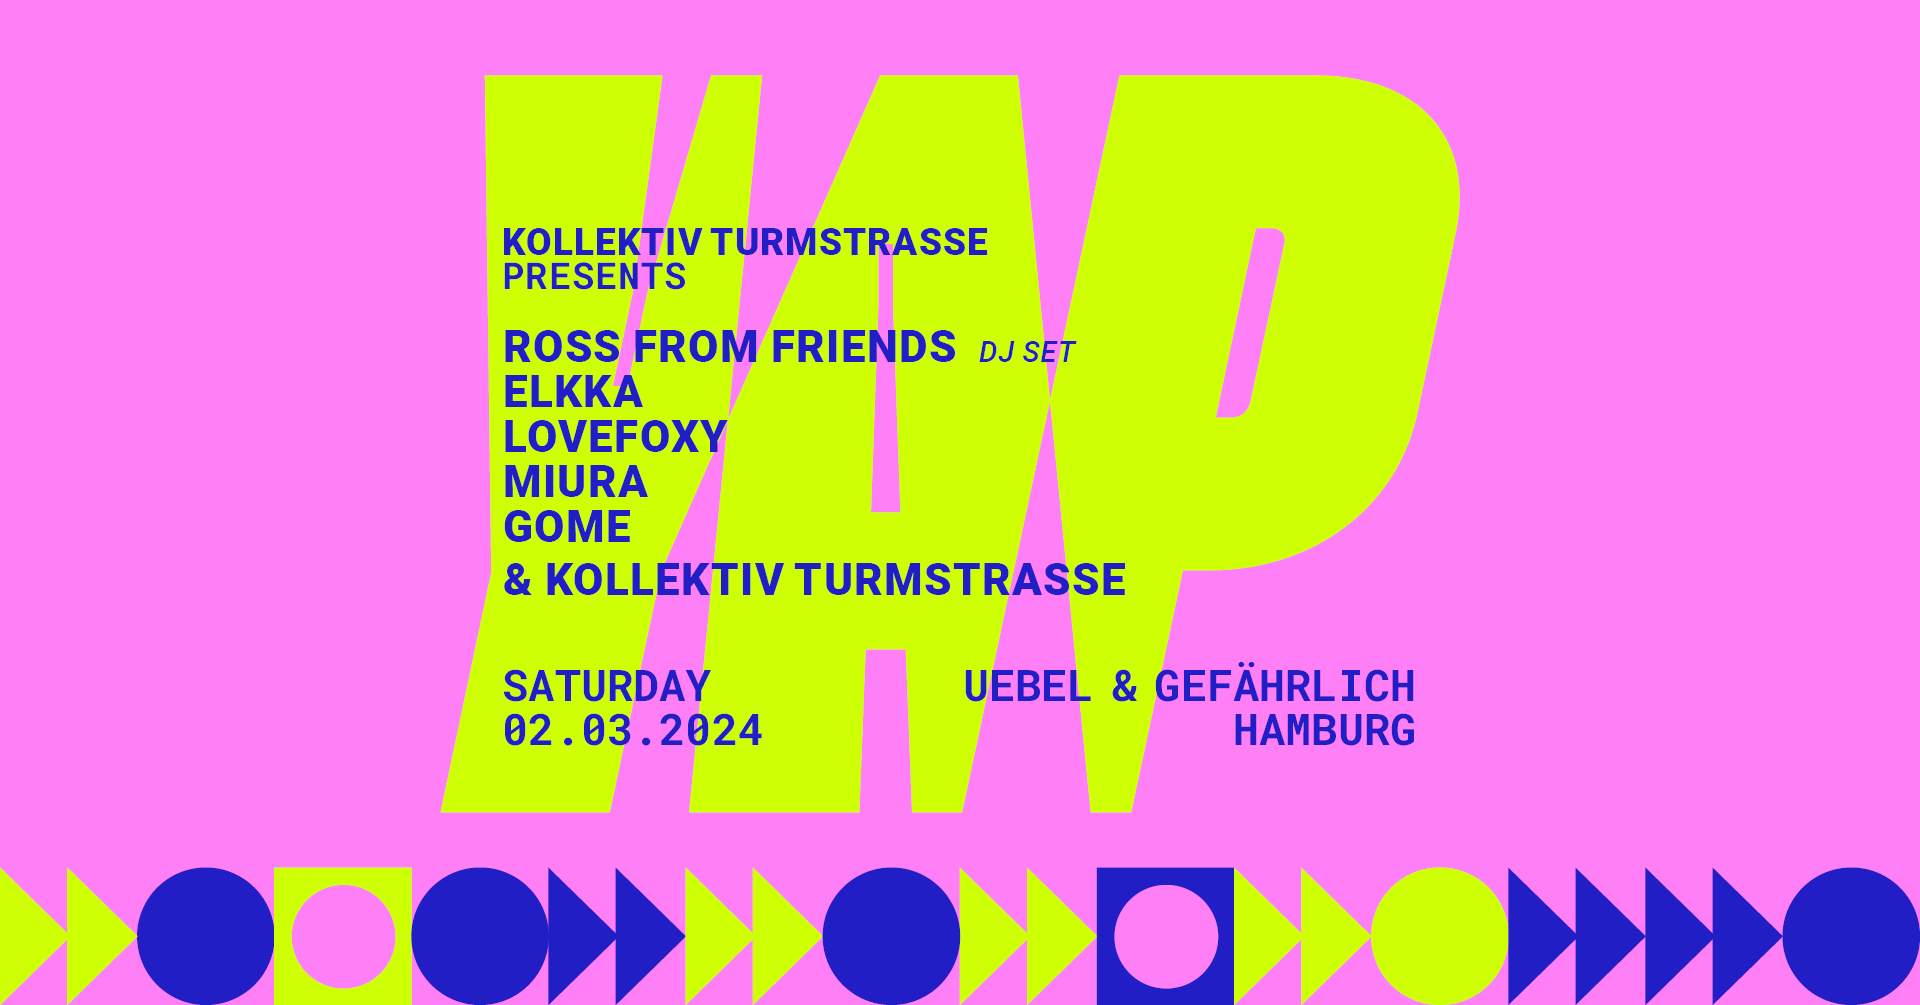 Kollektiv Turmstrasse pres. YAP with Ross From Friends, Elkka, Lovefoxy, Miura & gome - フライヤー表